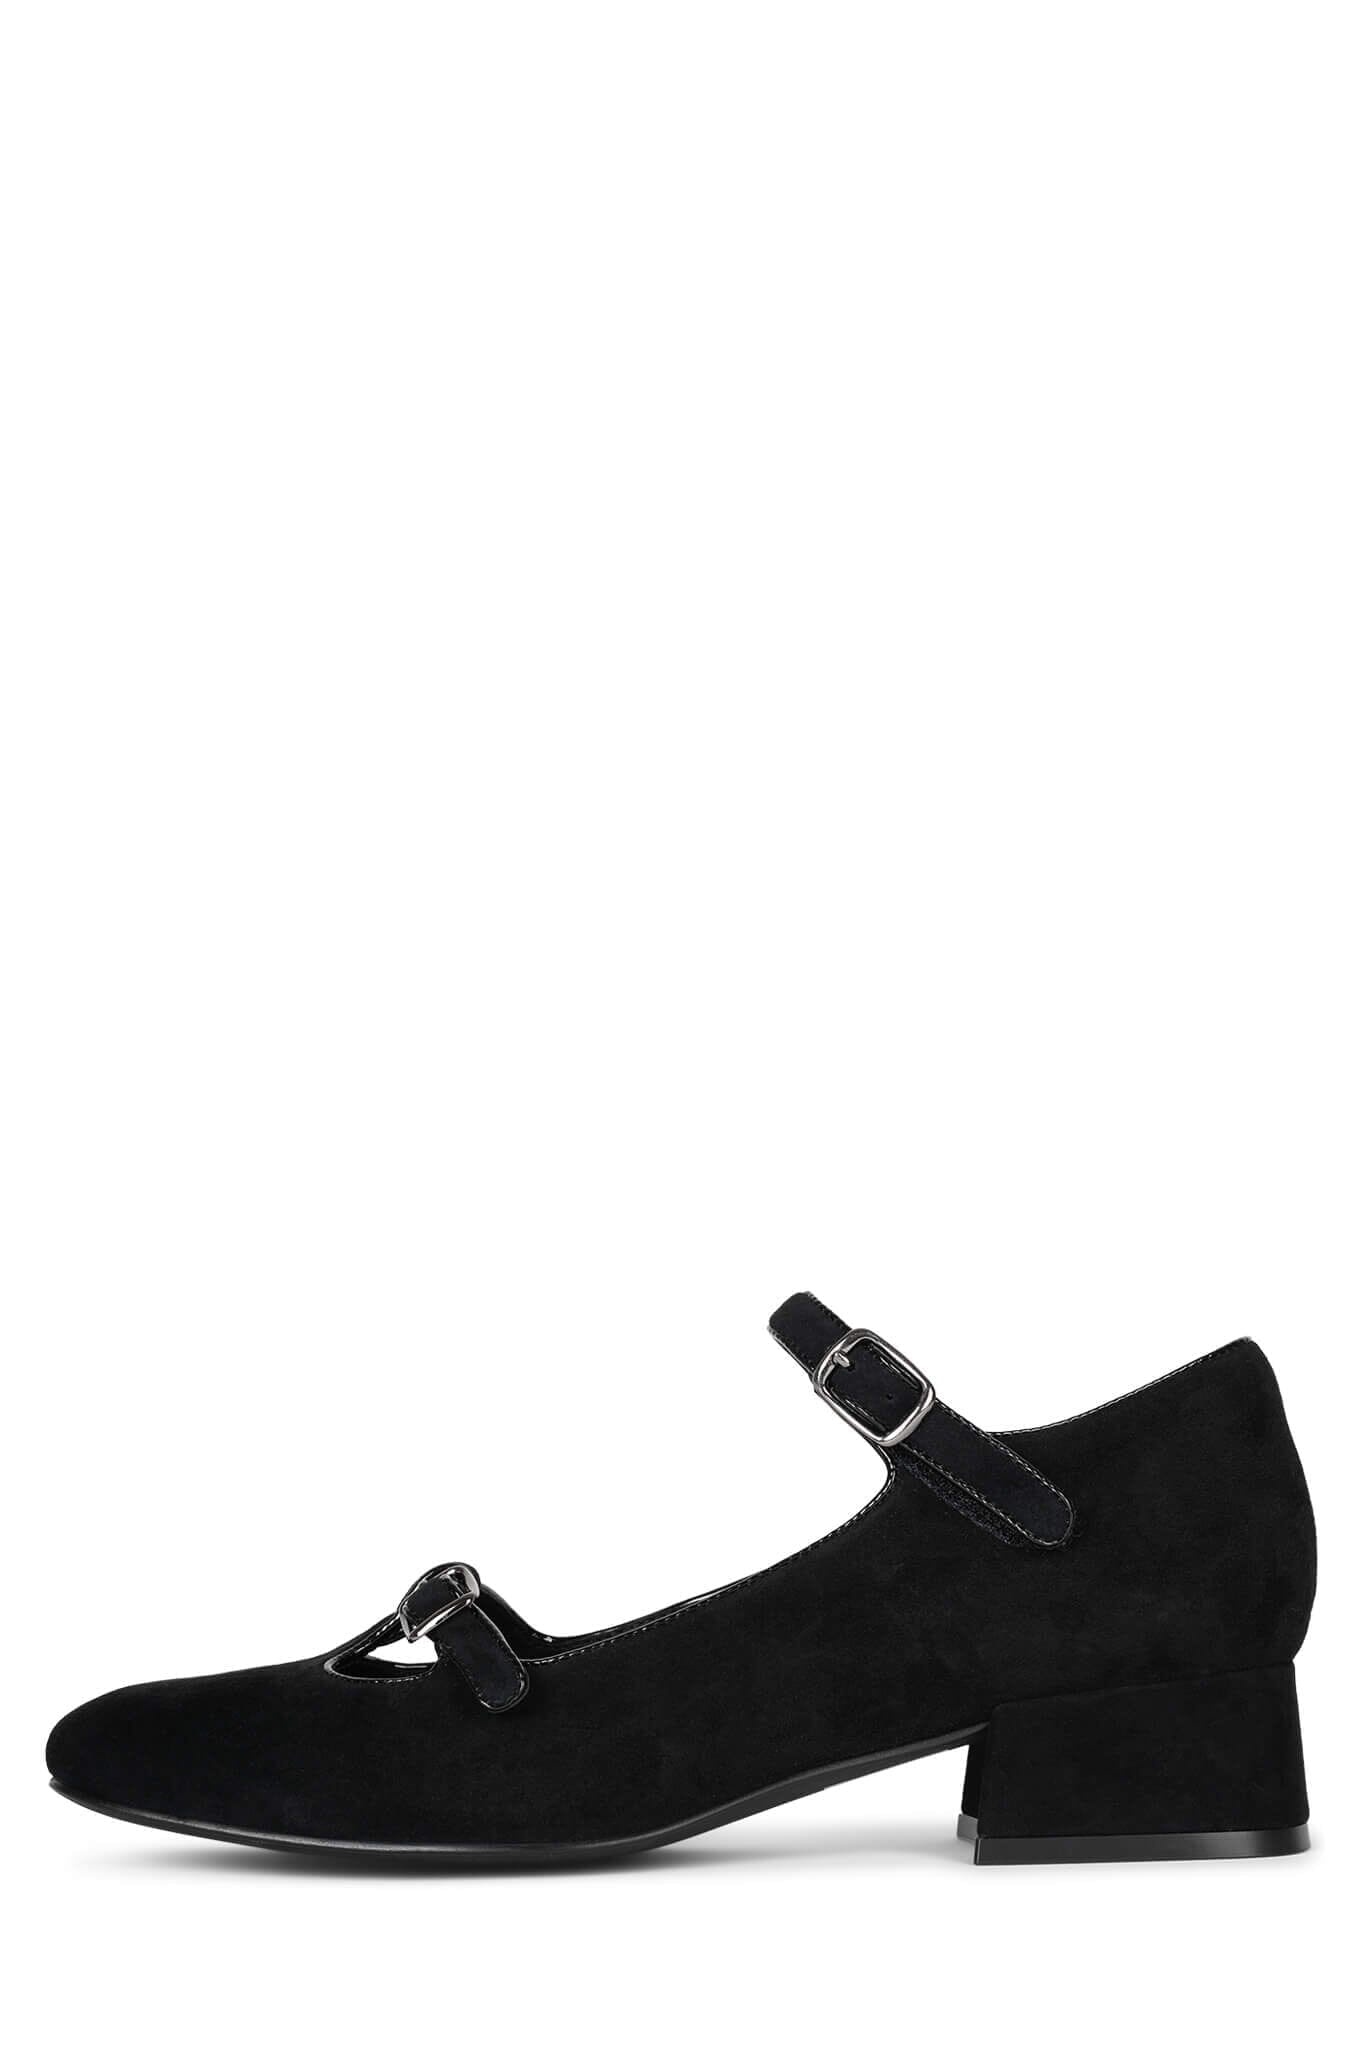 Jeffrey Campbell Metallic Athletic Shoes for Women | Mercari